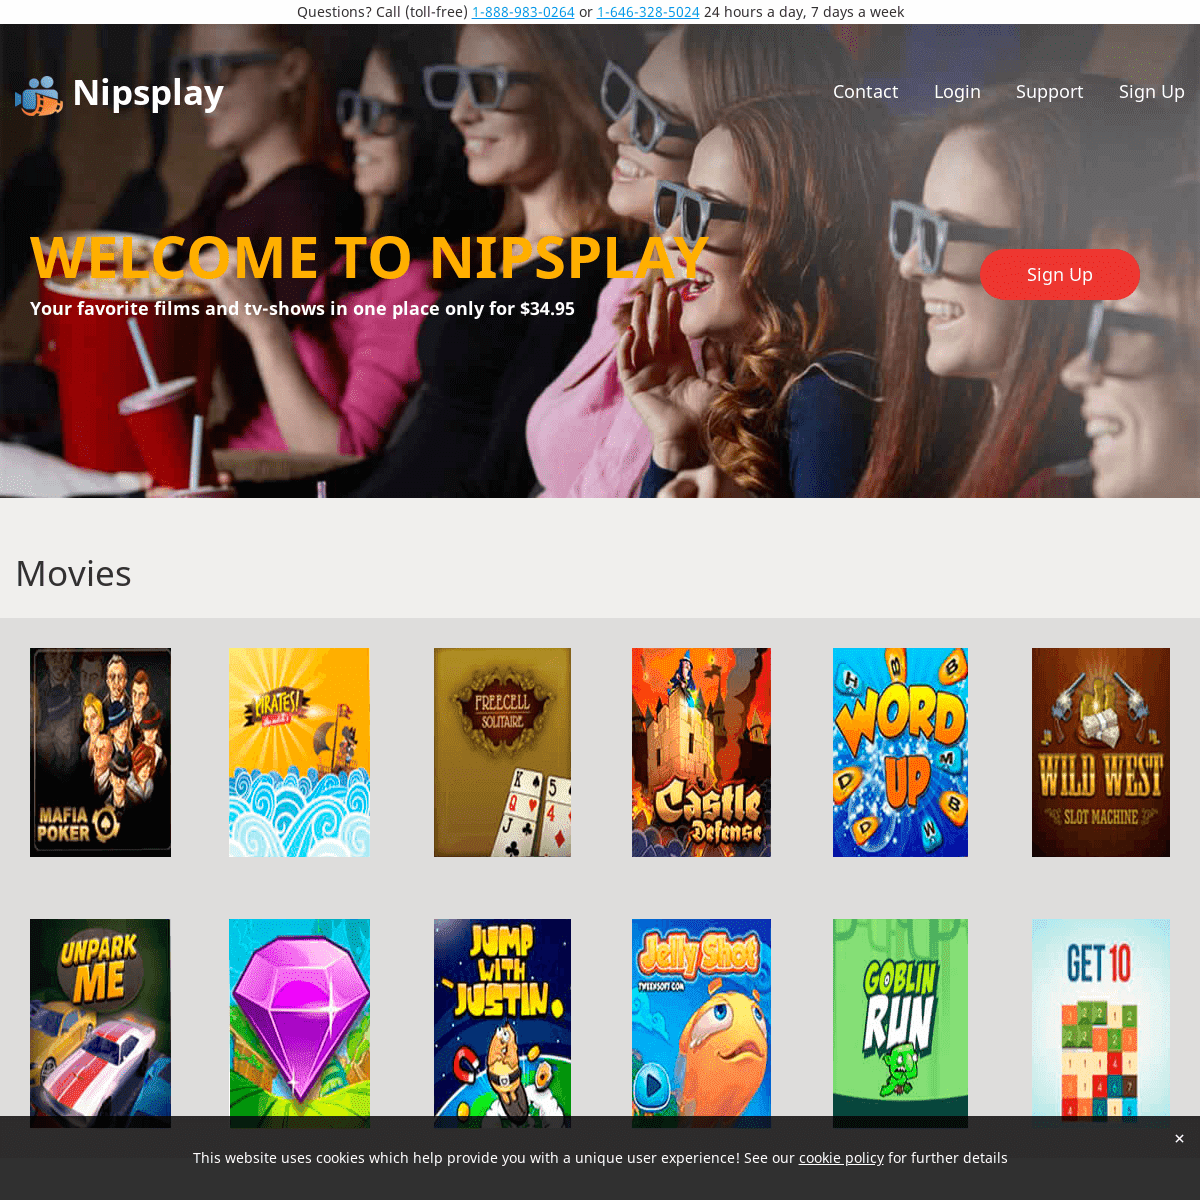 A complete backup of nipsplay.com